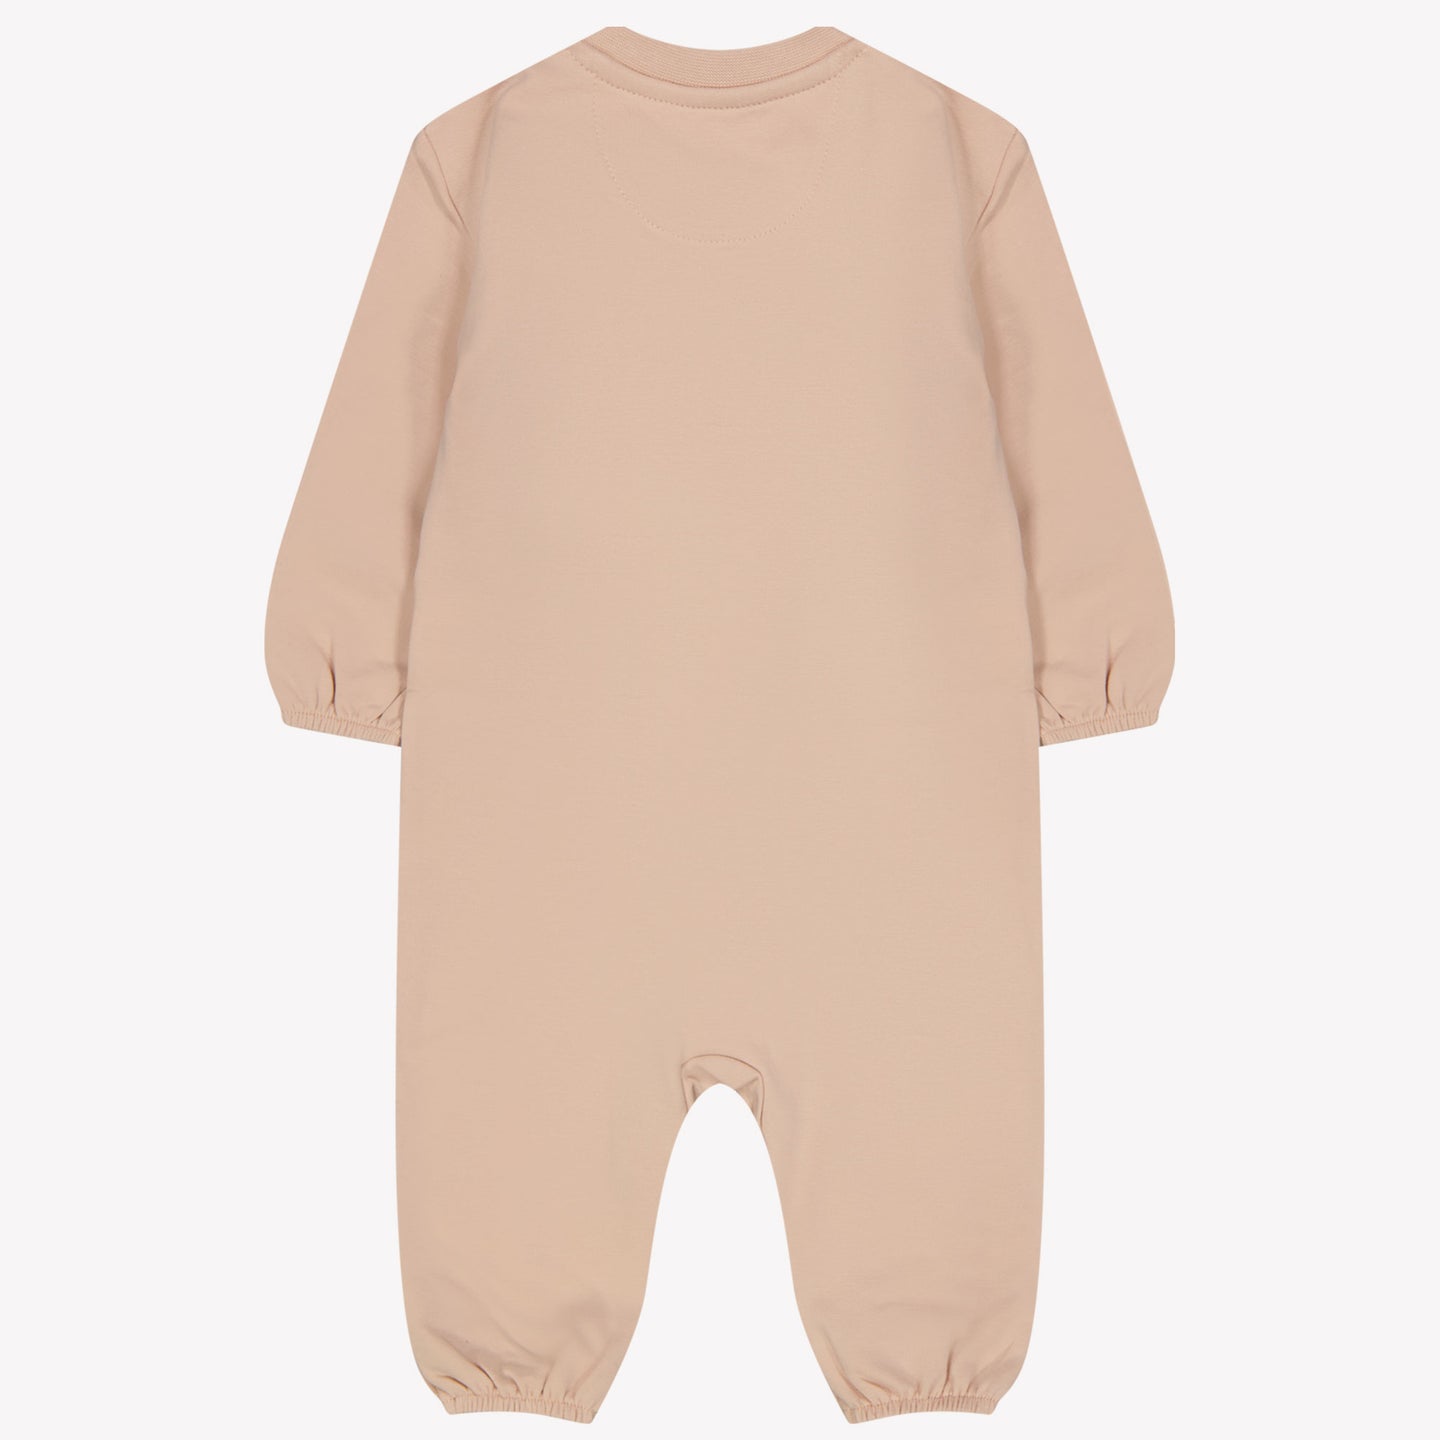 Calvin Klein Baby unisex box suit Salmon